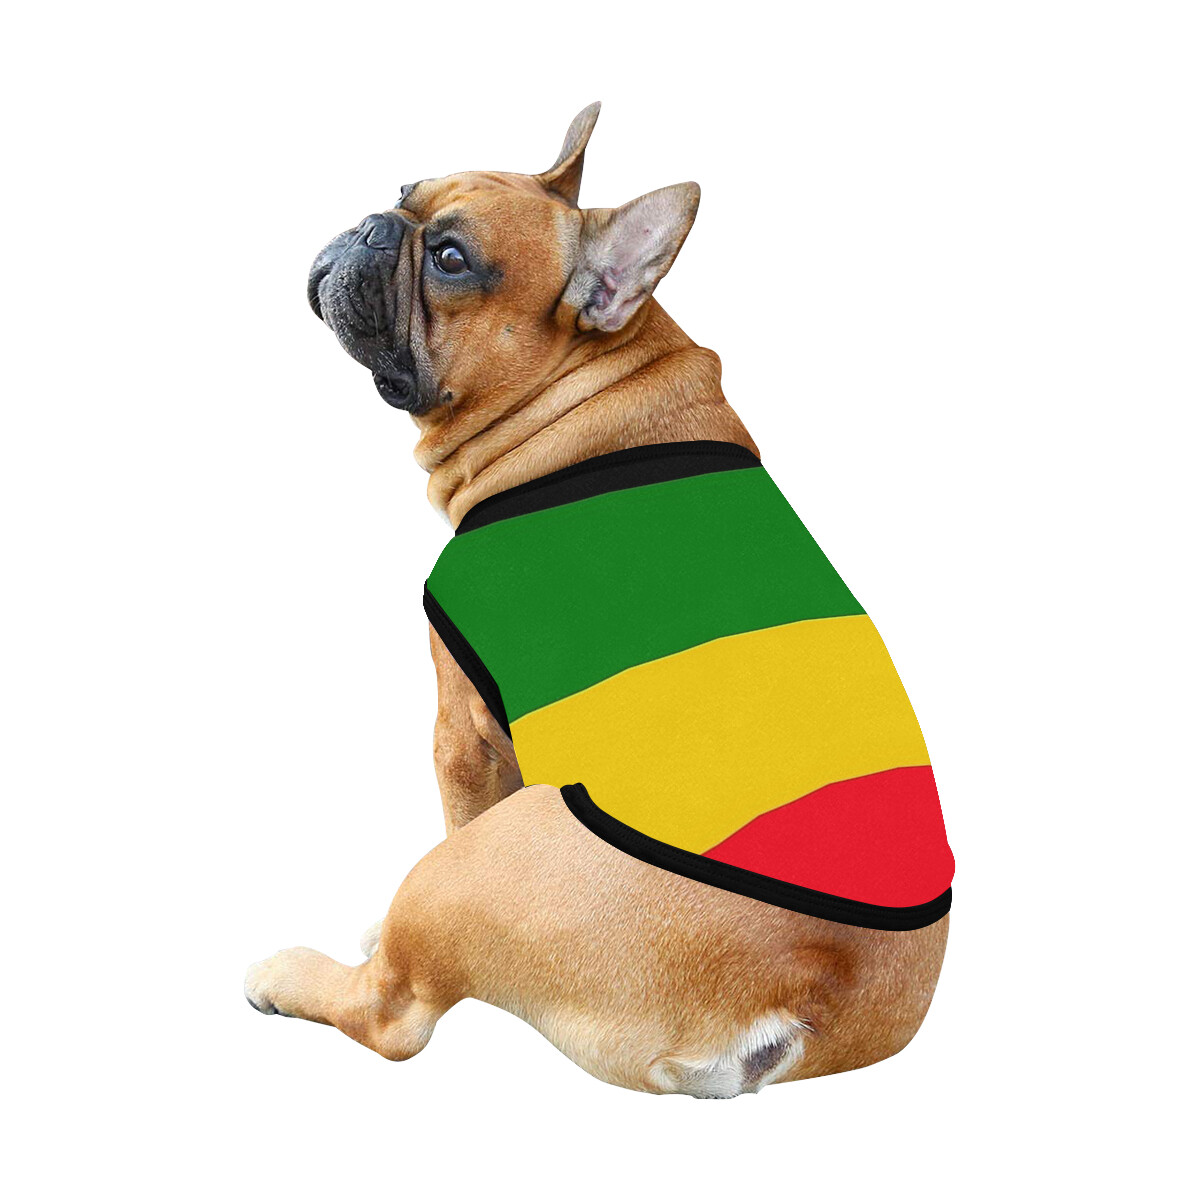 🐕 Rasta Dog Tank Top, Dog shirt, Dog clothes, Gifts, front back print, 7 sizes XS to 3XL, rasta flag, rasta dog shirt, rasta dog t-shirt white